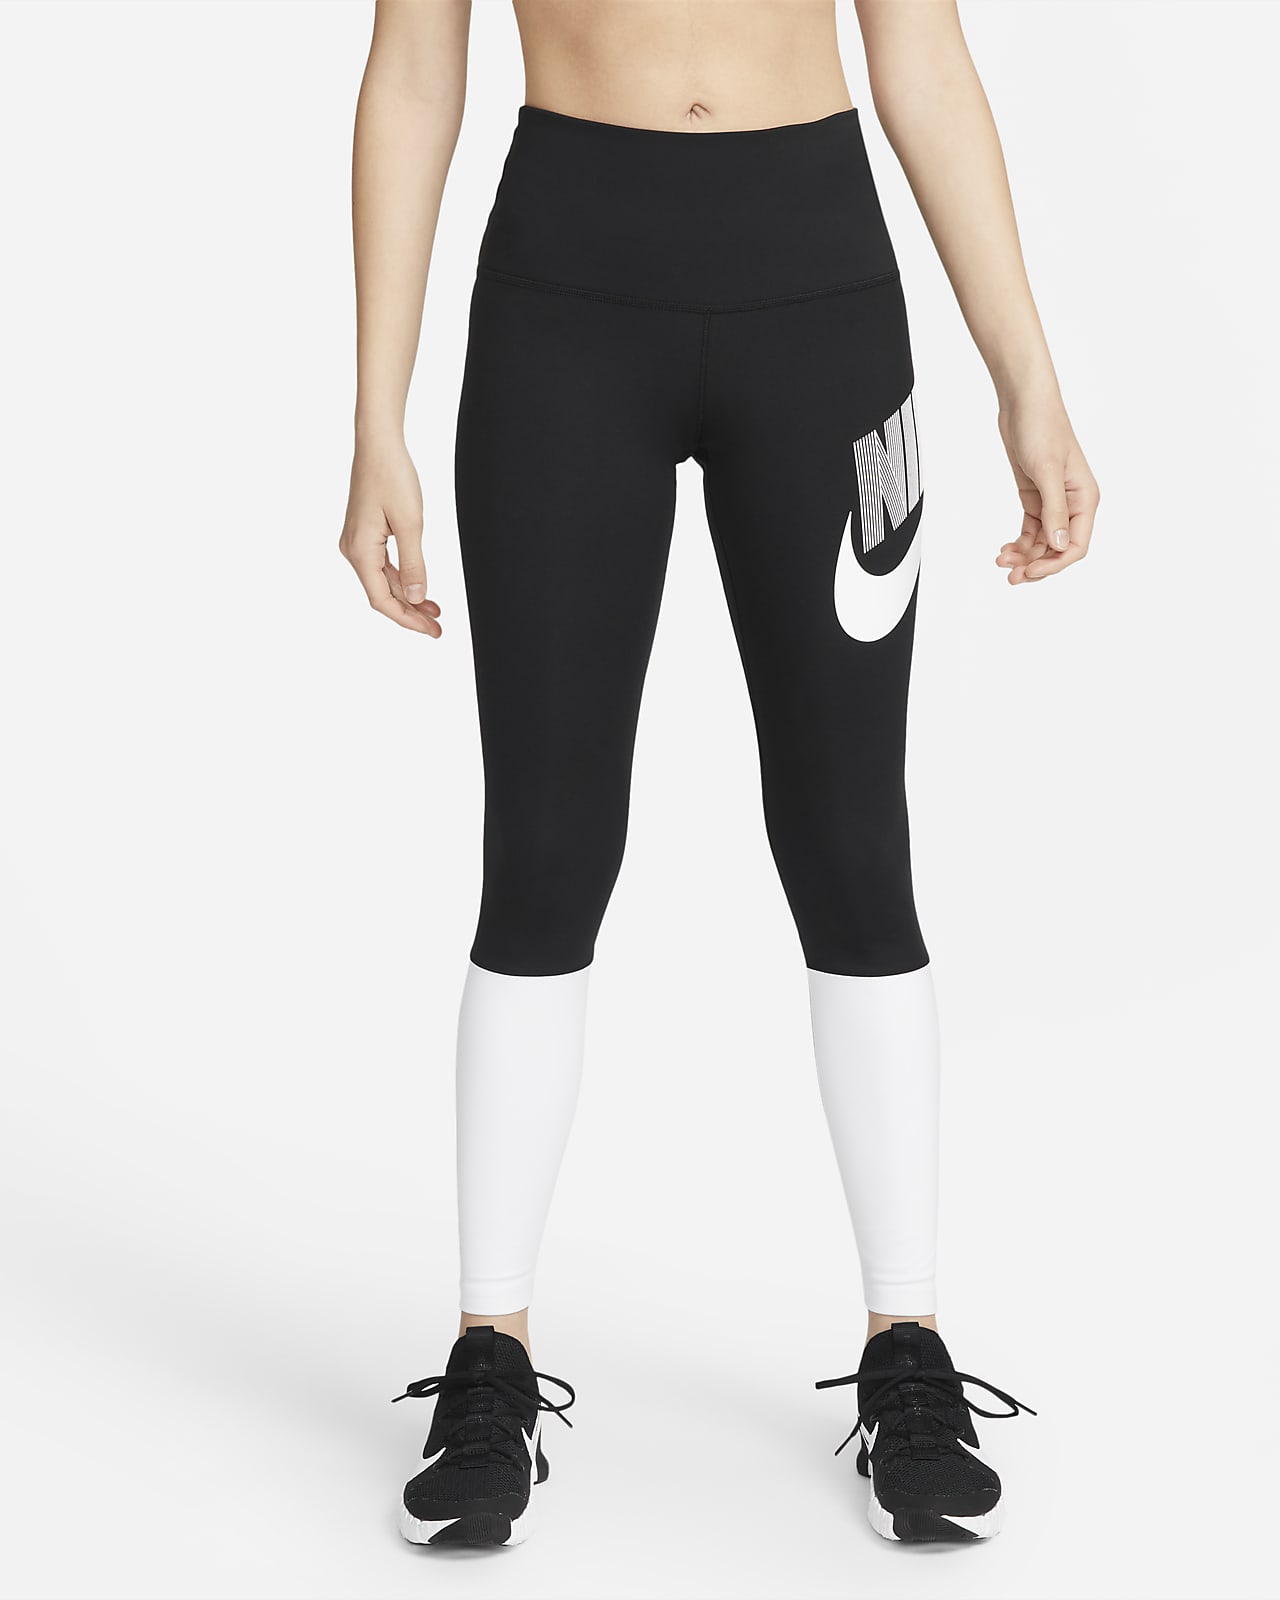 Nike One Women's High-Waisted Dance Leggings